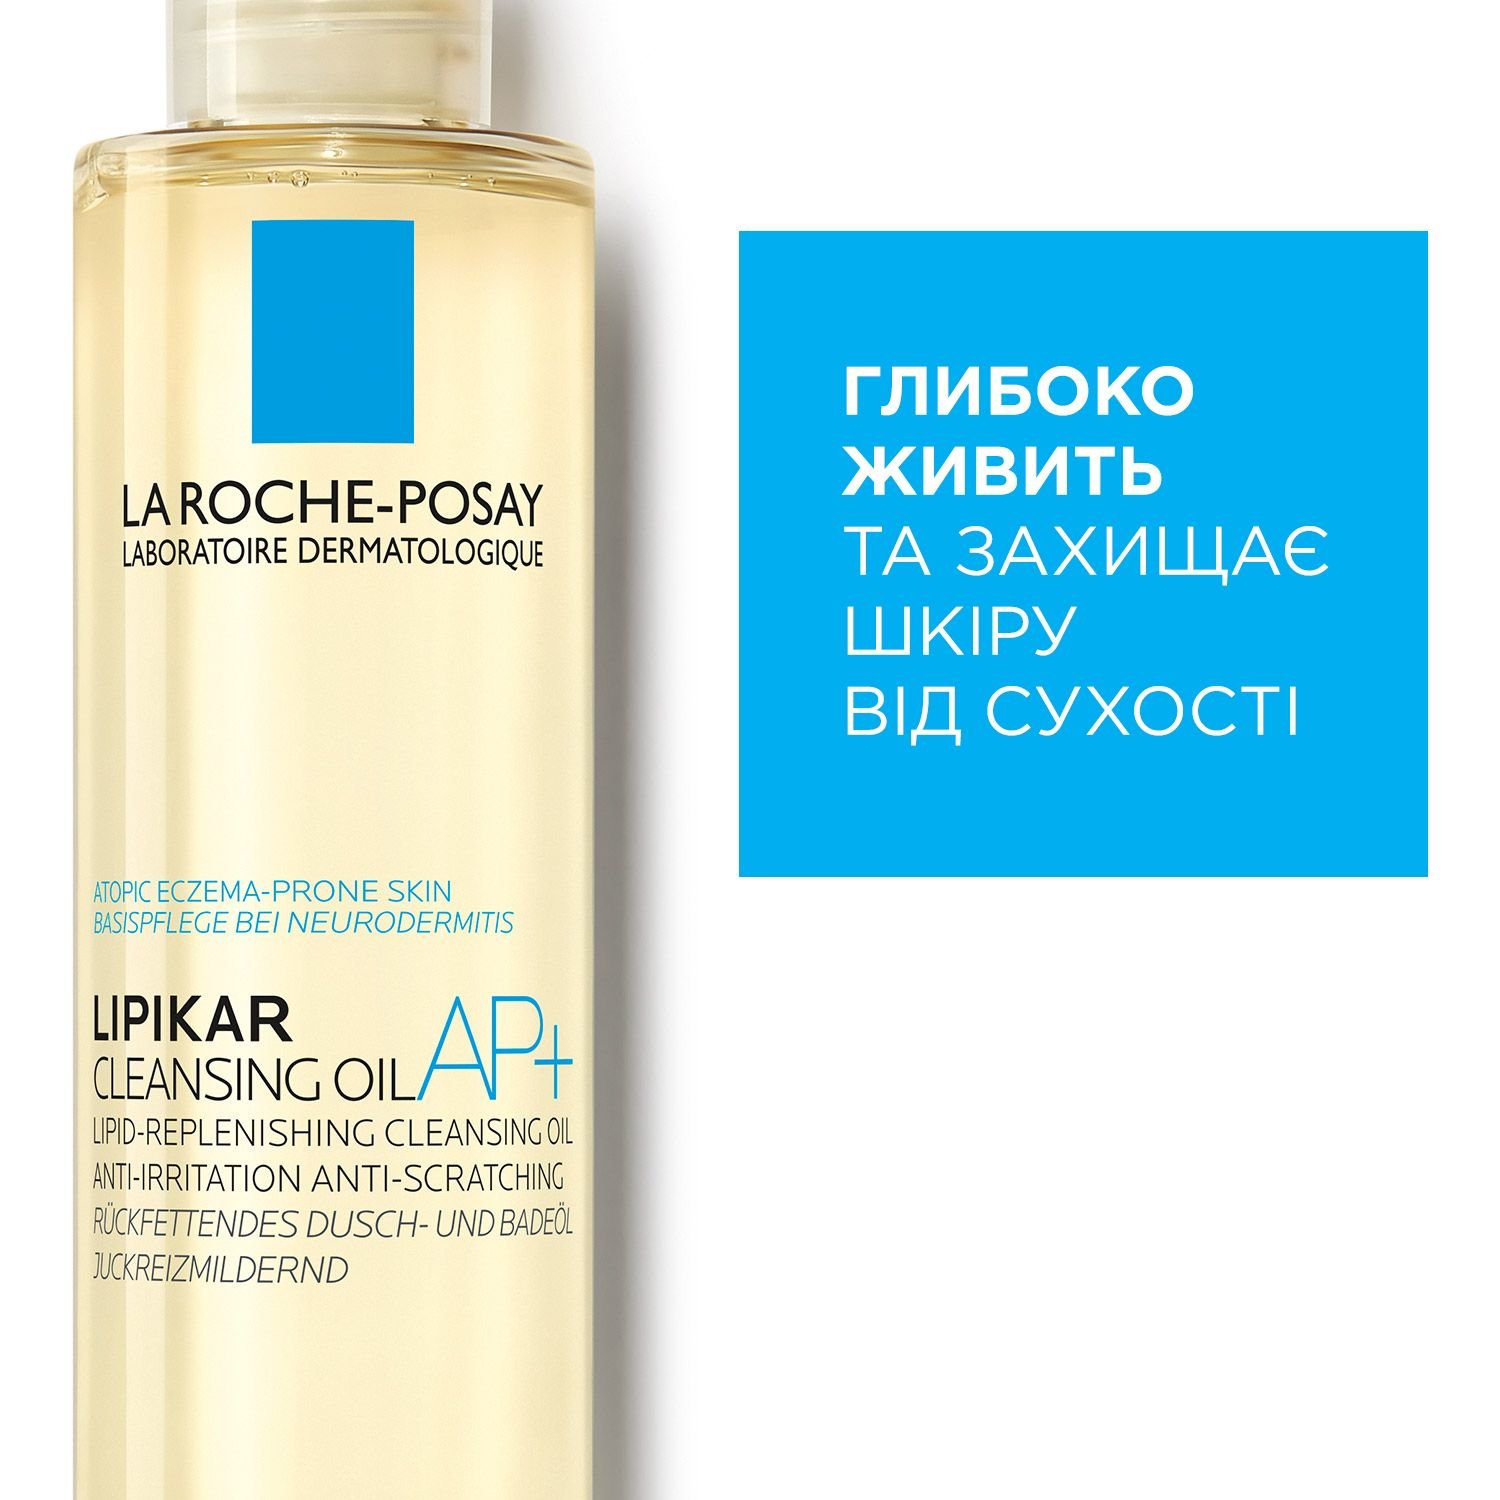 Масло для ванны La Roche-Posay Lipikar Cleansing Oil AP+ 200 мл - фото 2